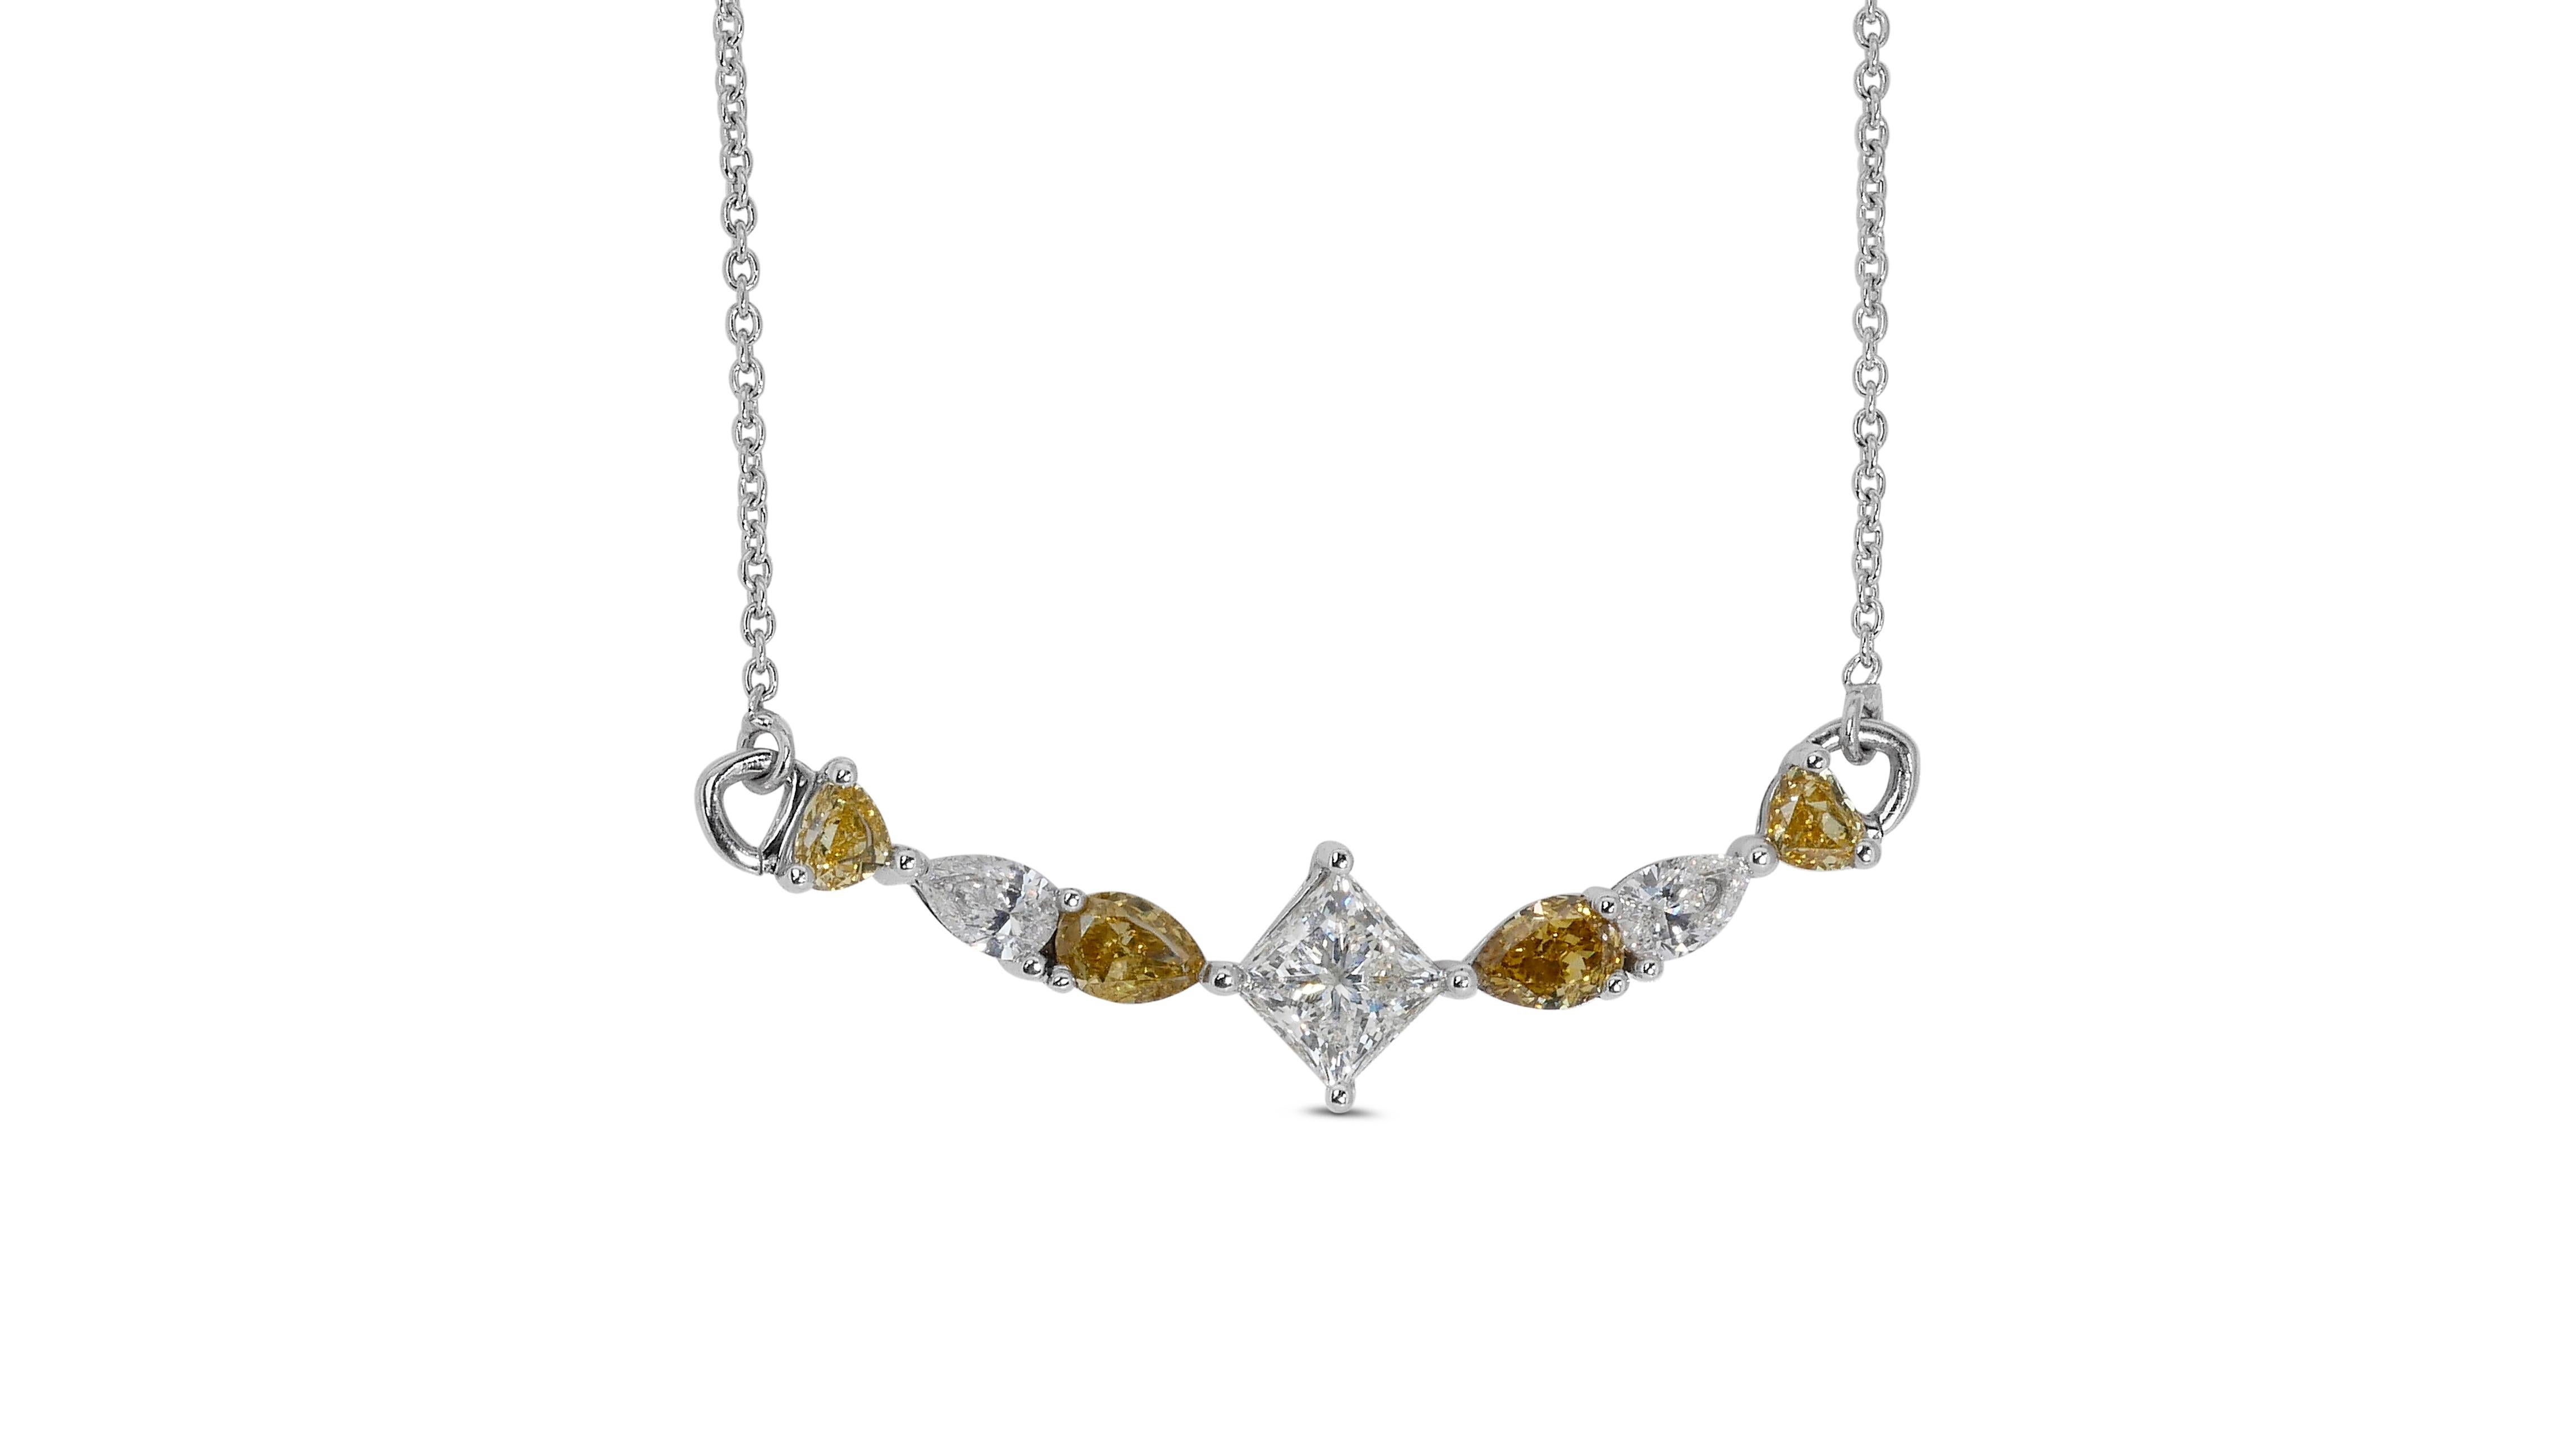 Mixed Cut Marvelous 18k White Gold Necklace w/ 1.9 Carat Natural Diamonds IGI Certificate For Sale